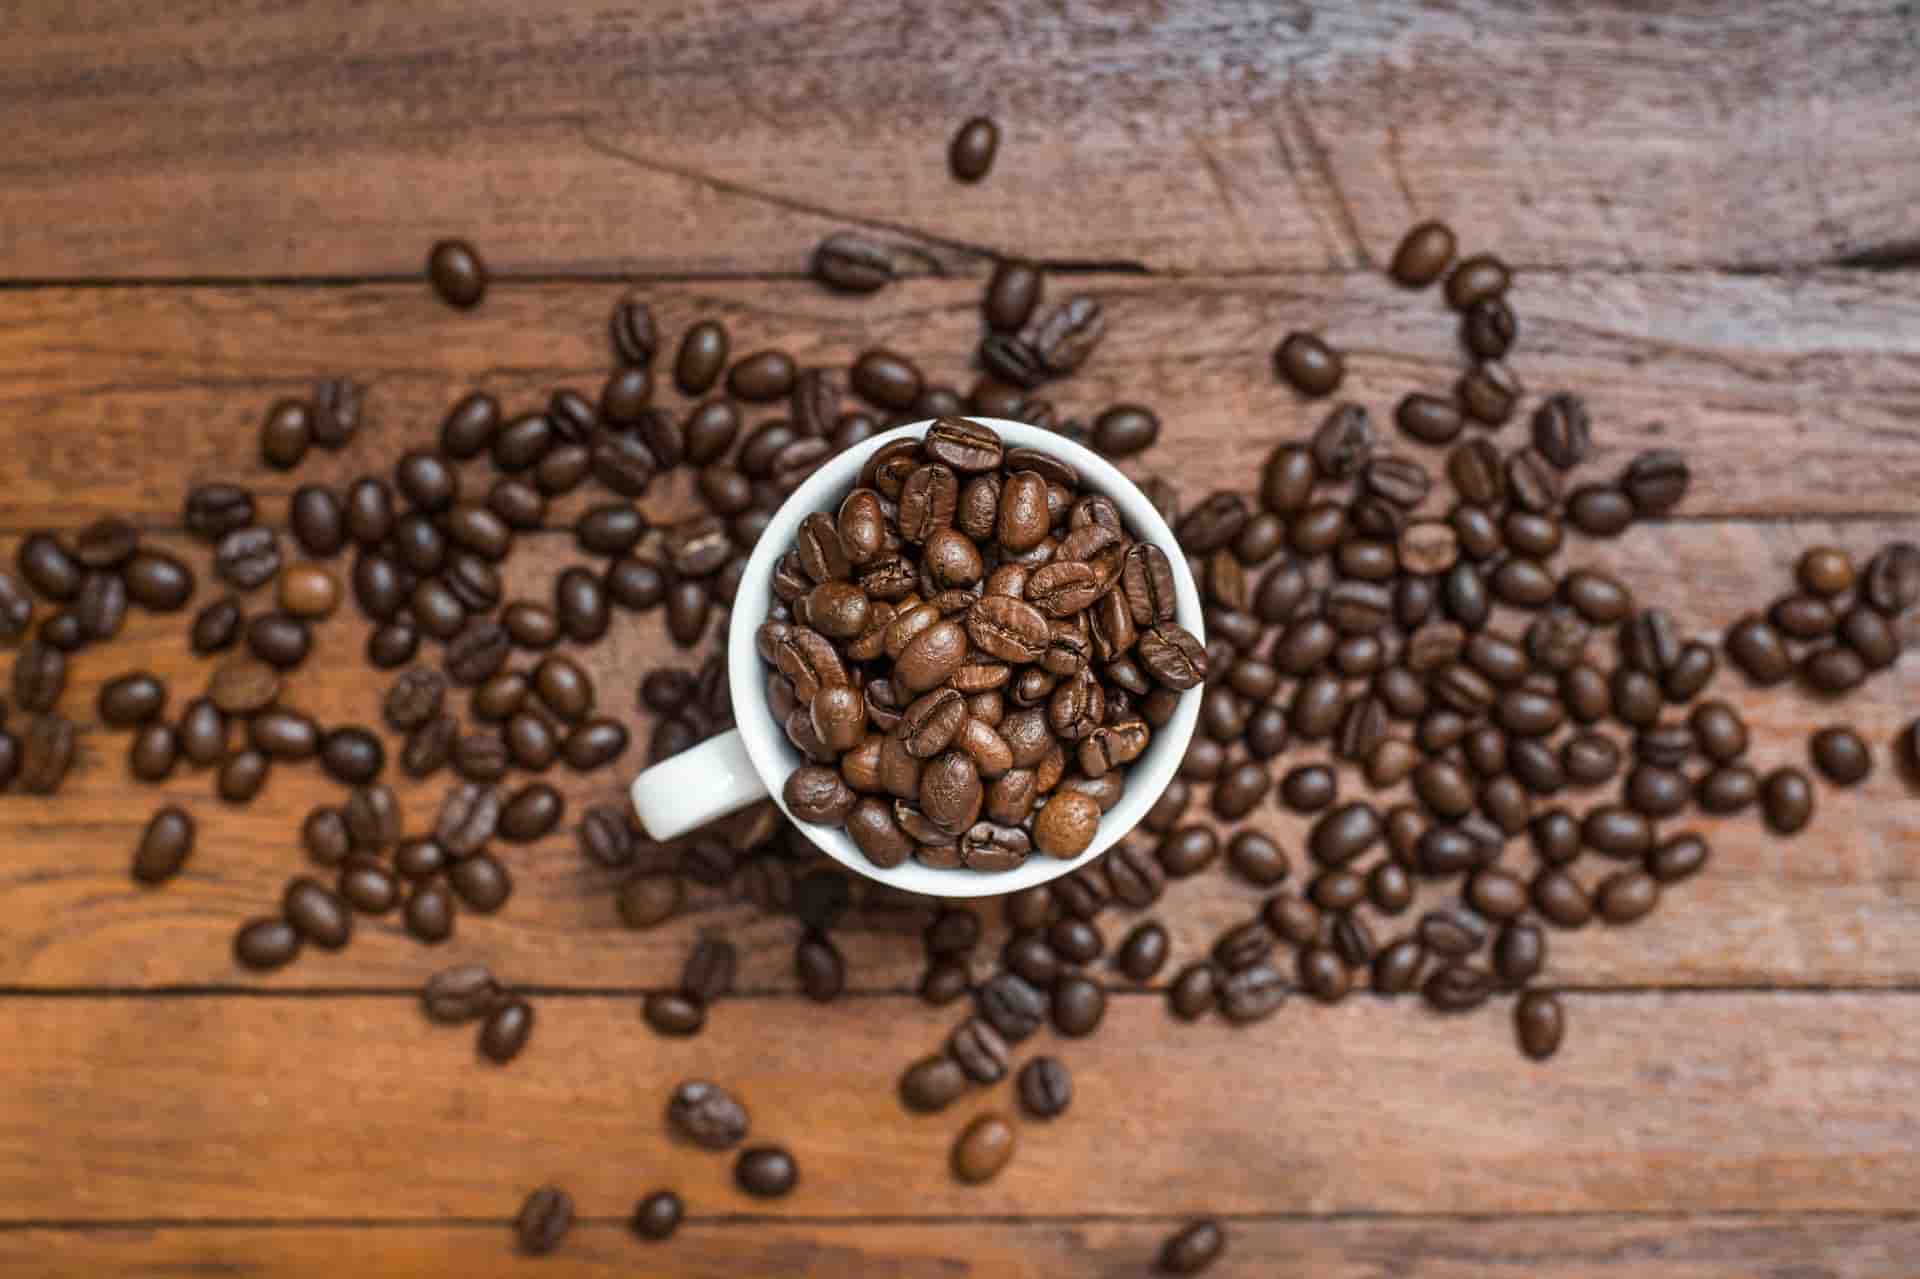 Best Dark Roast Coffee Beans